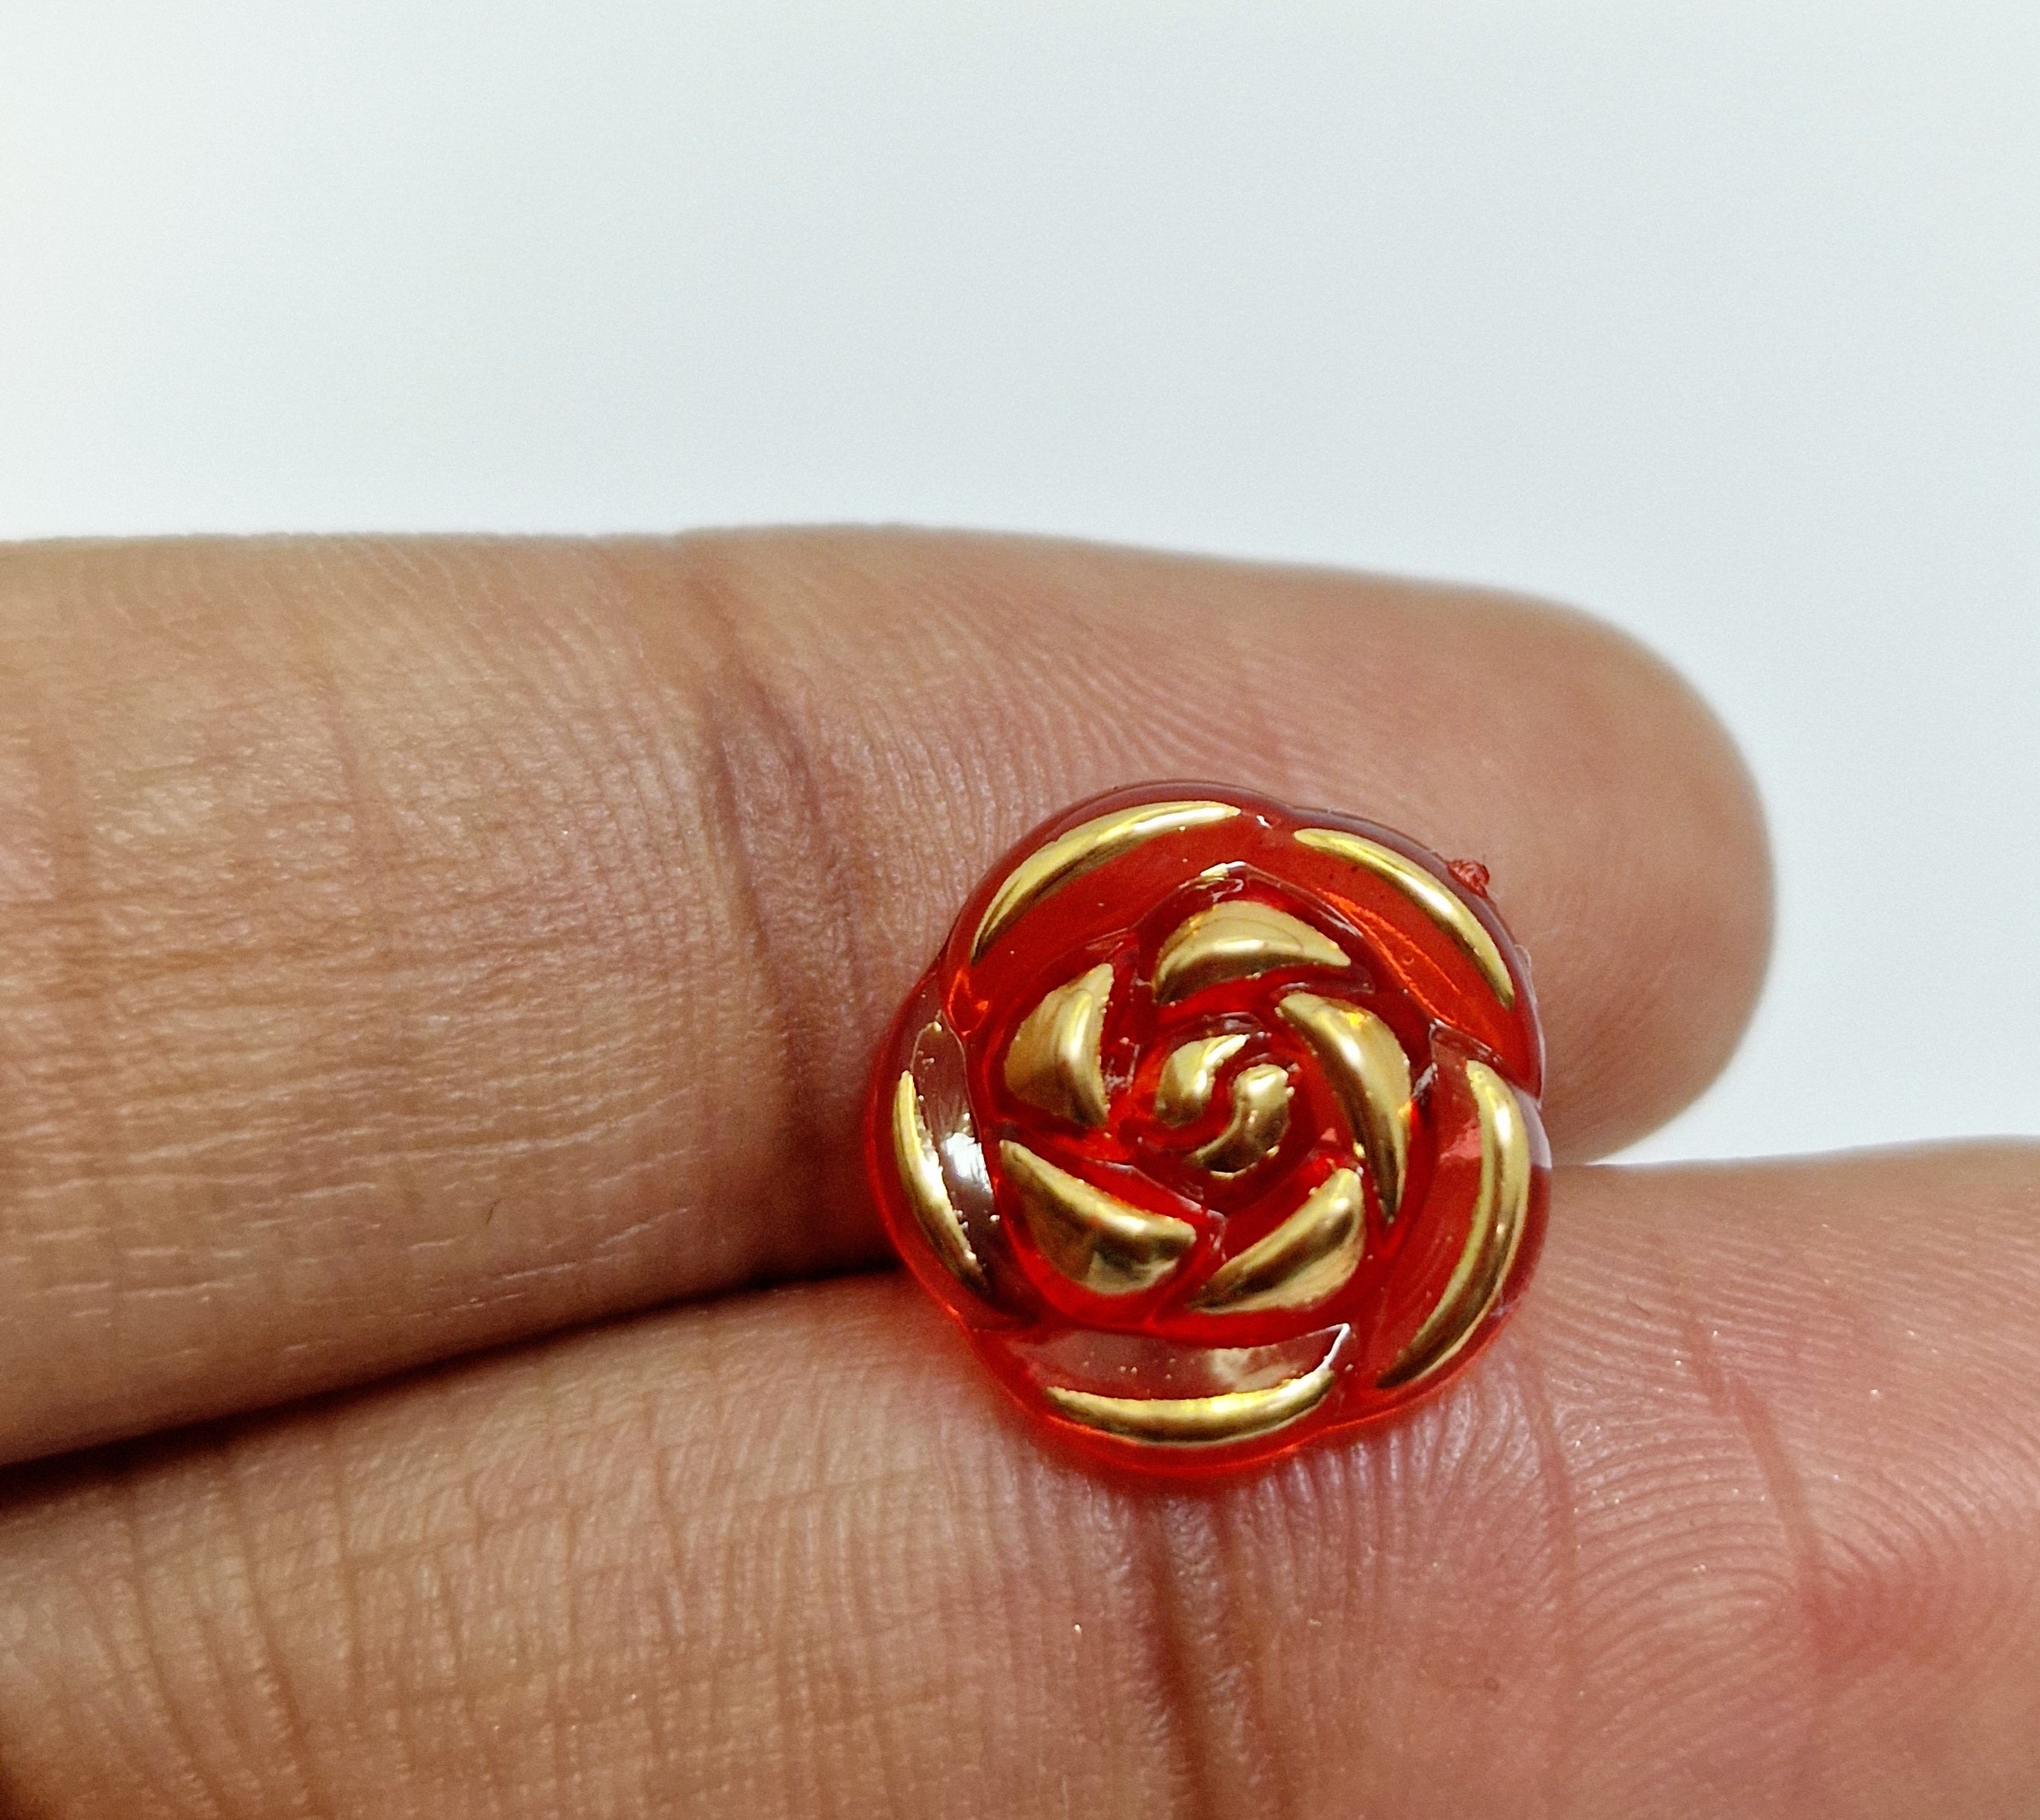 MajorCrafts 40pcs 13mm Red & Gold Rose Flower Shank Resin Buttons